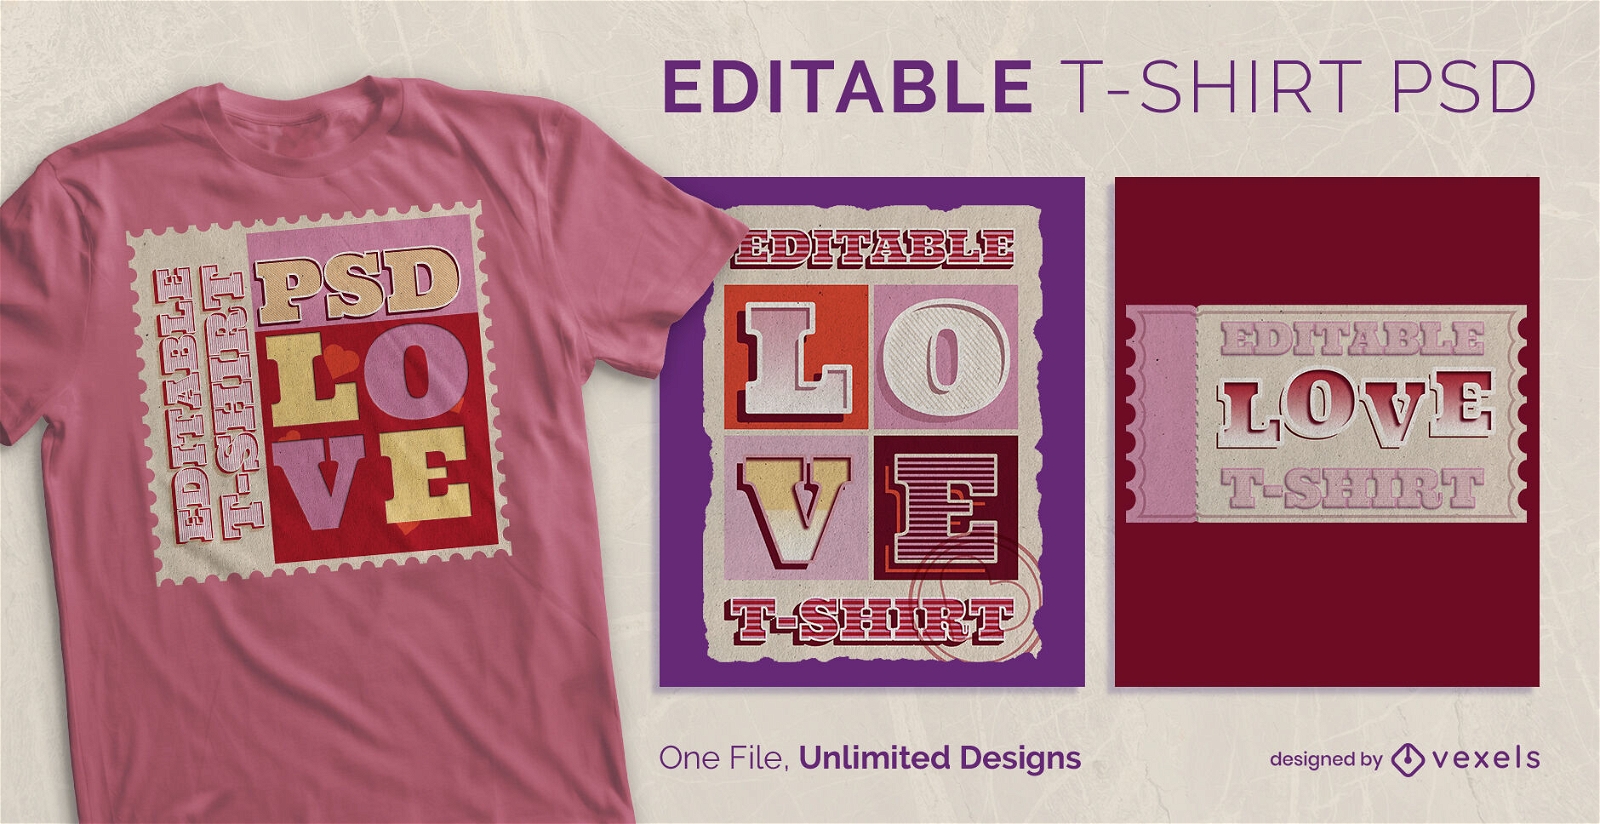 Retro love postcards scalable t-shirt psd